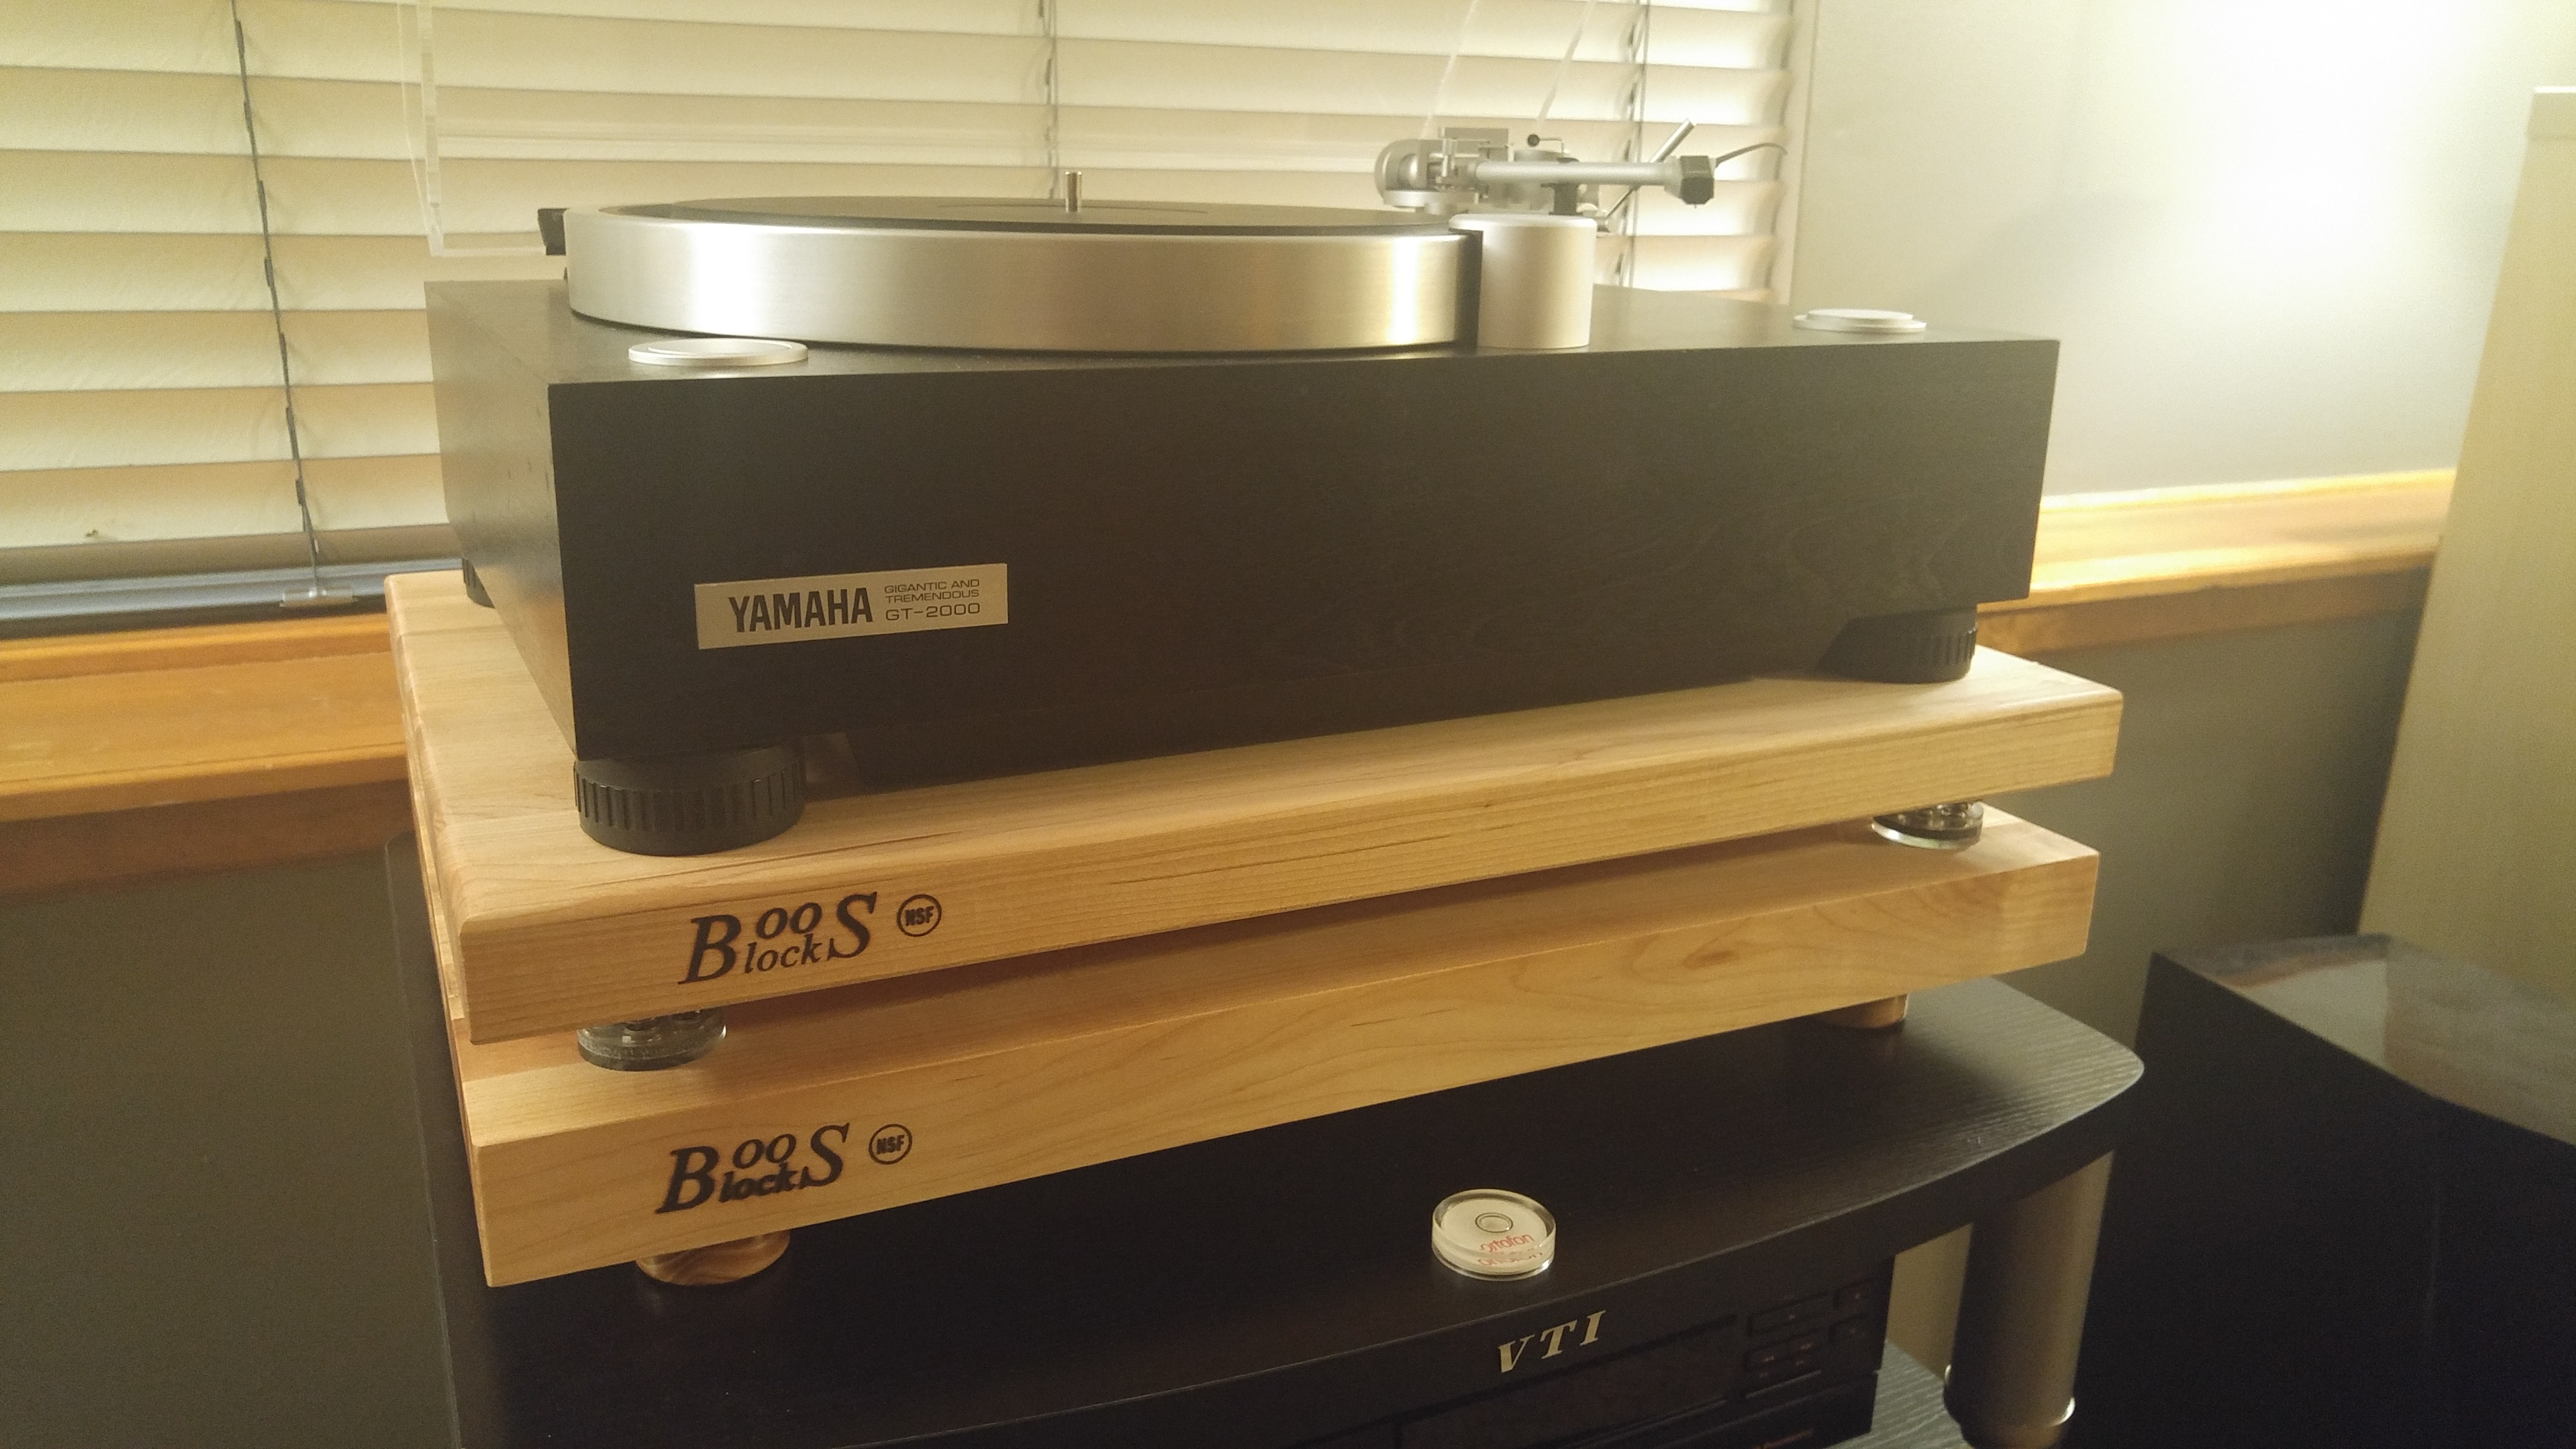 APTITLIG Chopping board, bamboo, Length: 9 ½ - IKEA